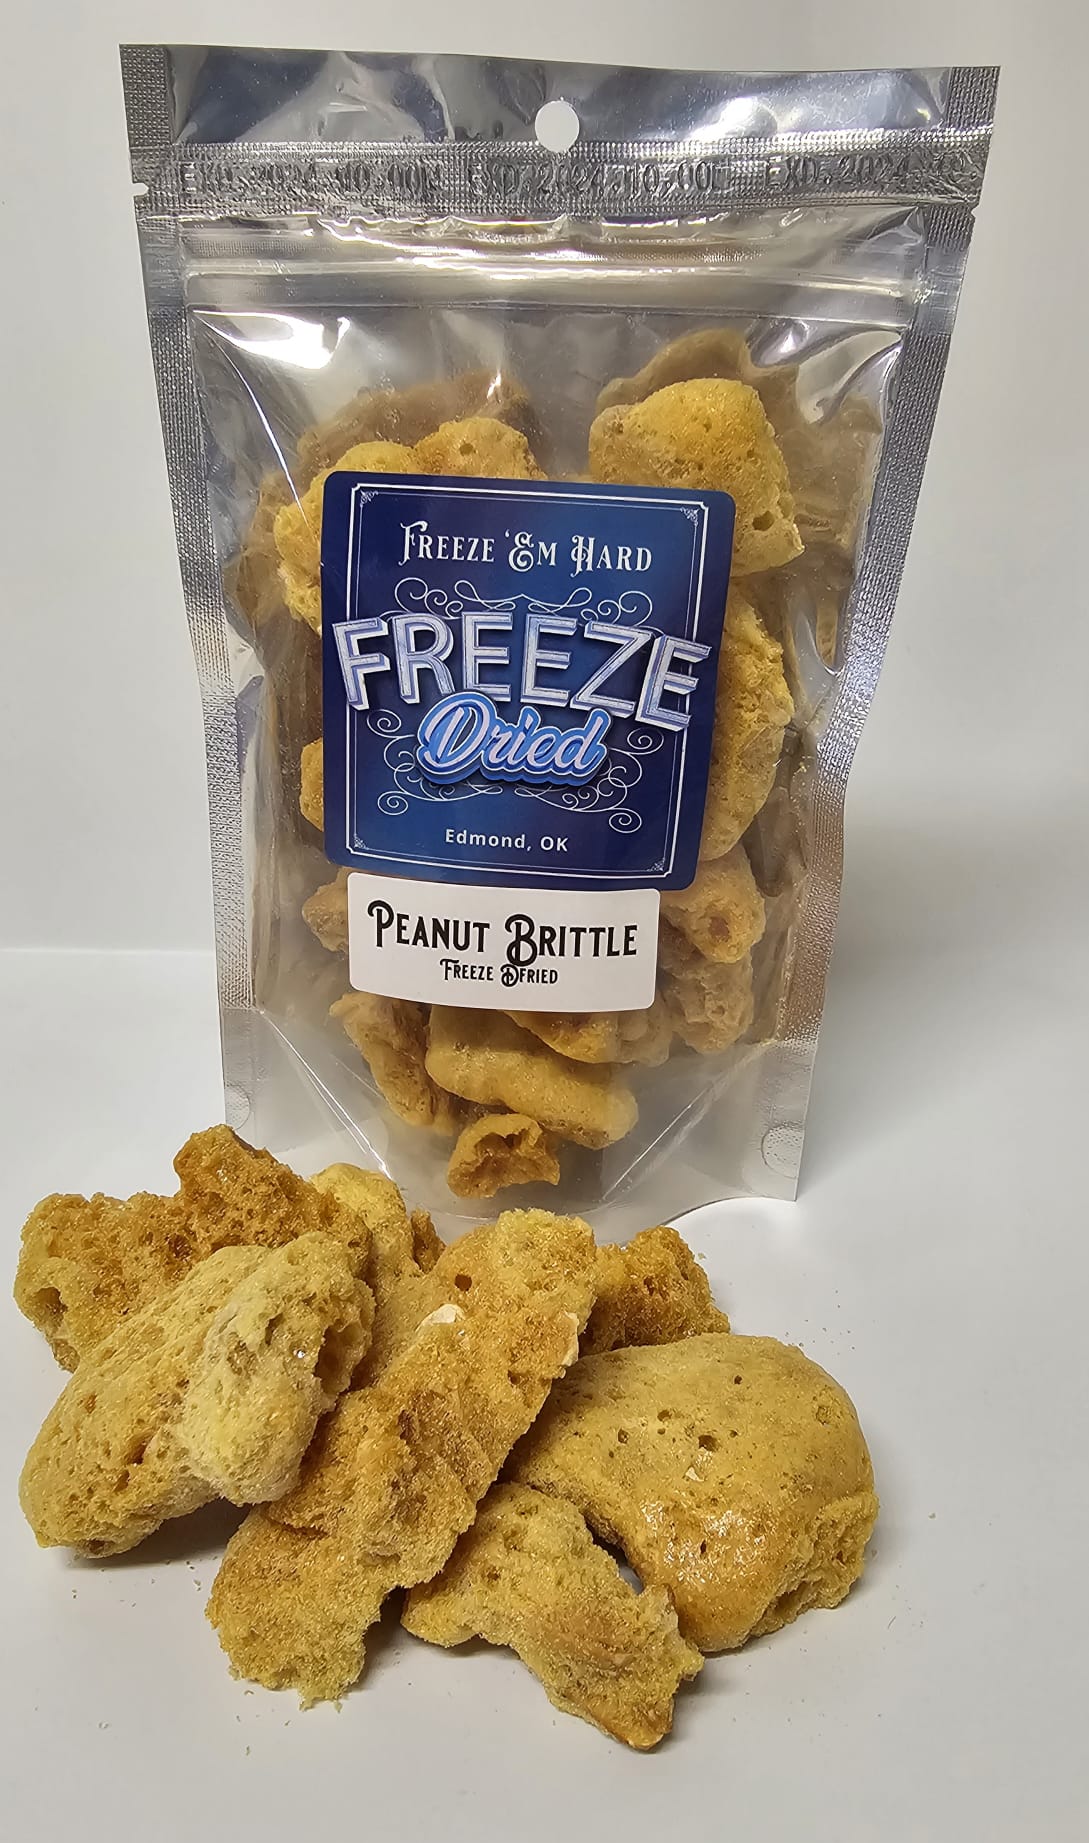 Peanut Brittle Freeze Dried by Dutch Addictions - Large 6x9 Bag, Gluten Free